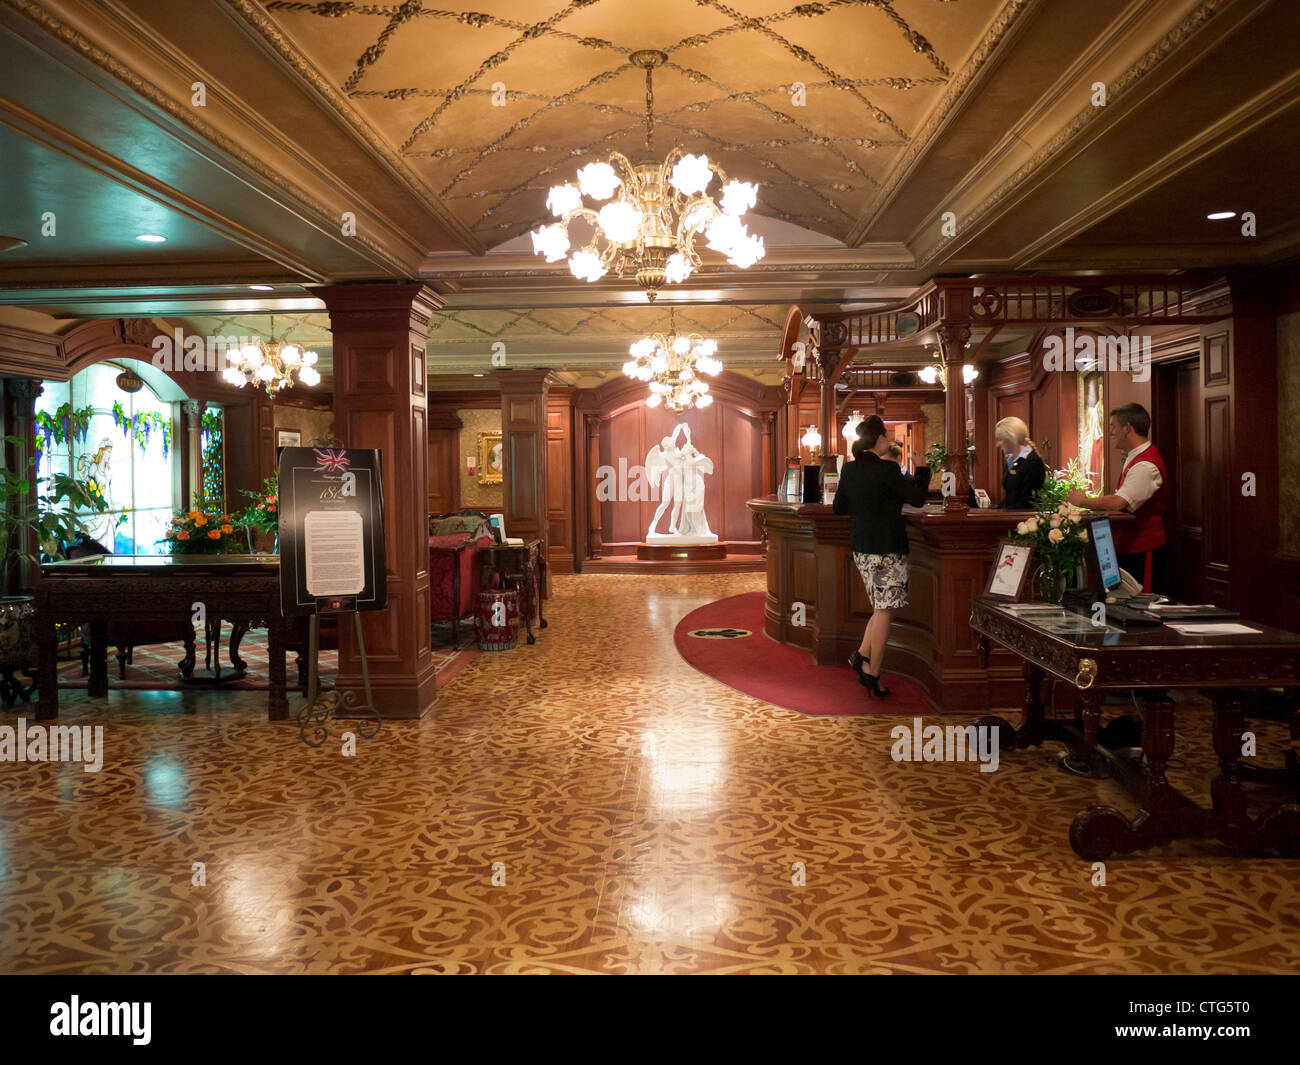 Prince Of Wales Hotel Lobby Interieur Stockfoto